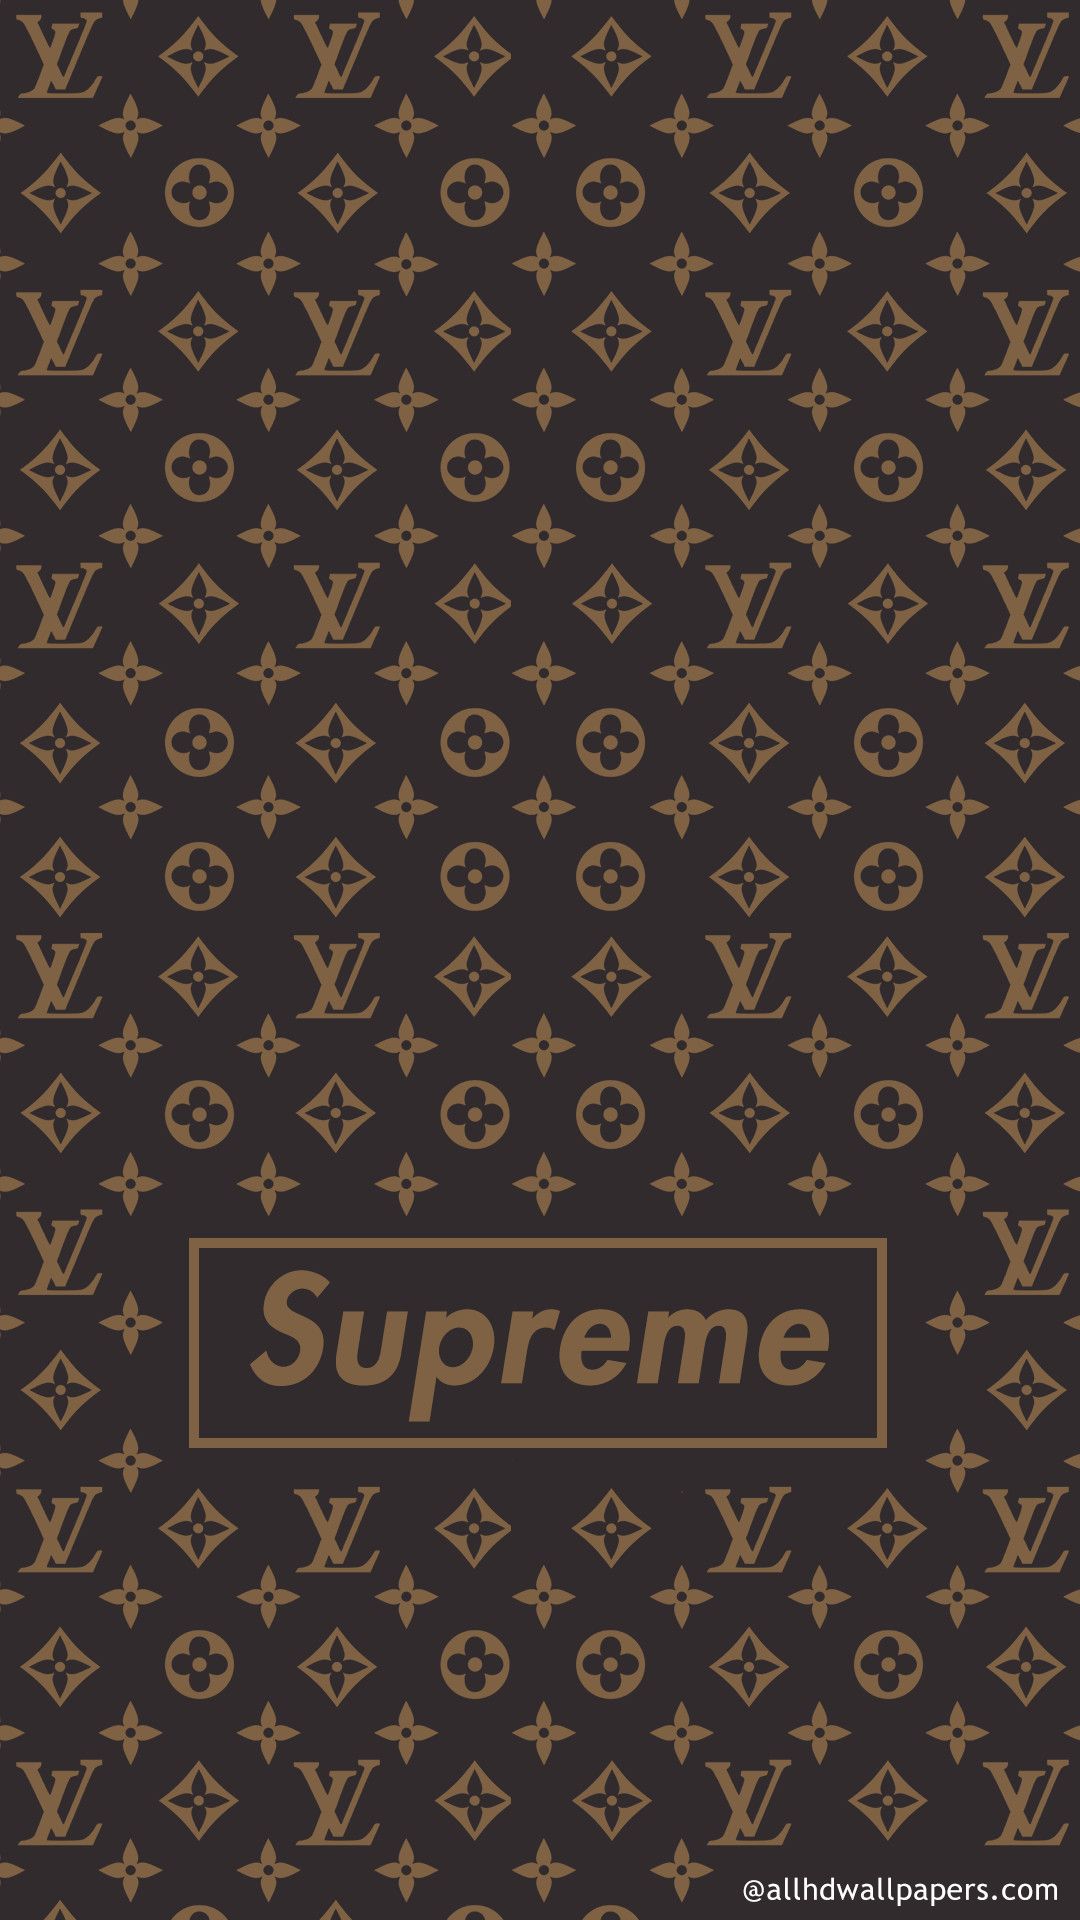 1080x1920 Supreme Iphone Wallpaper Gold